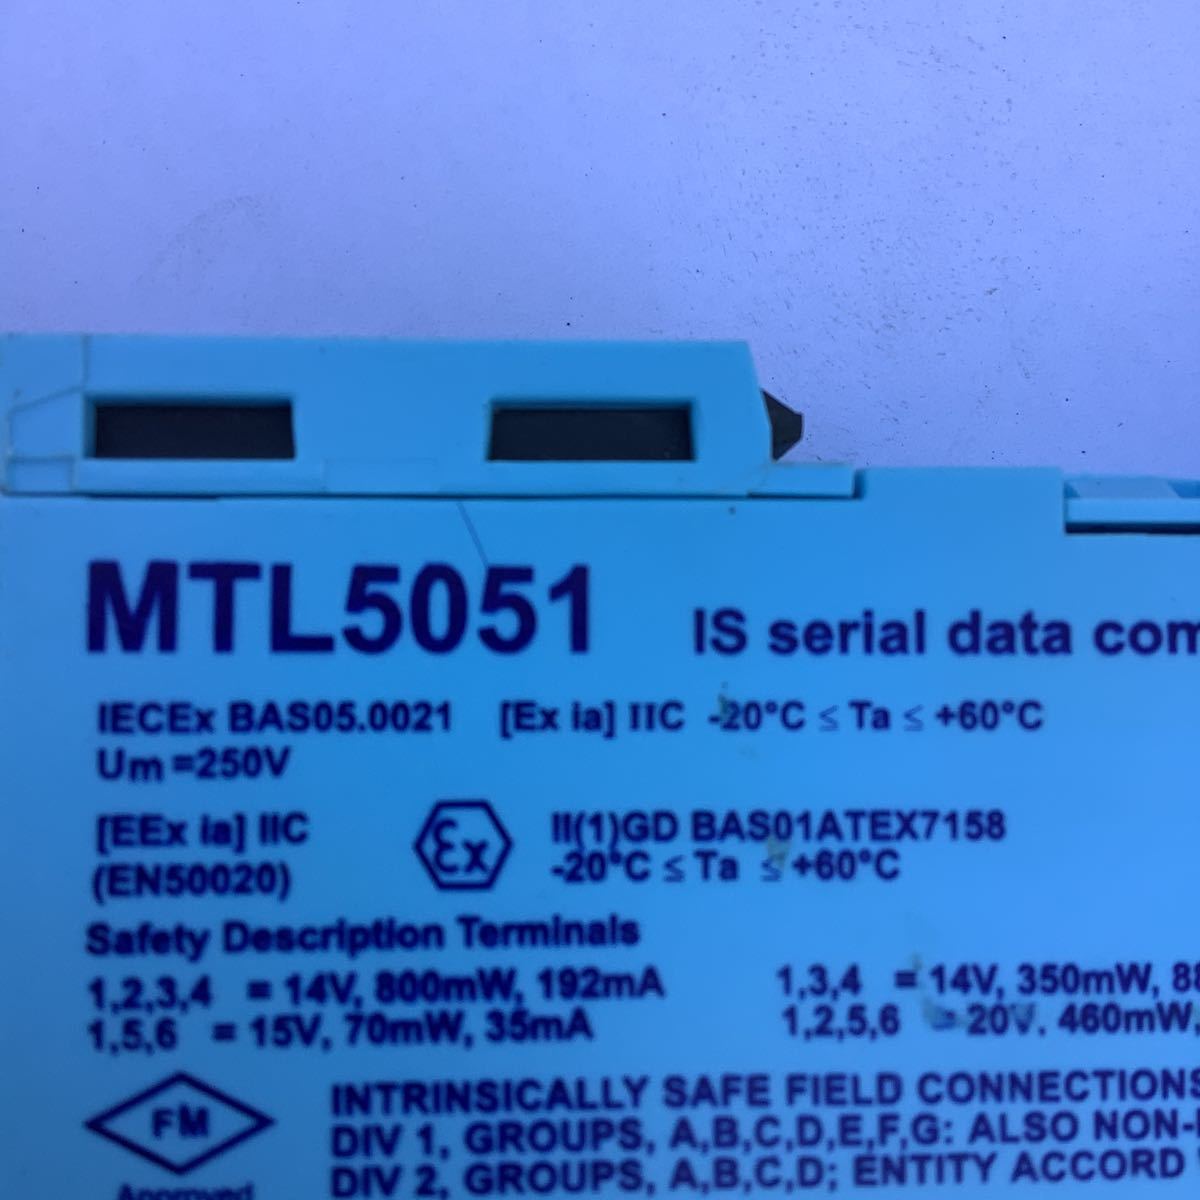 MTL 5015 ISシリアルデータ通信アイソレーター中古品です。動作未確認です。_画像3